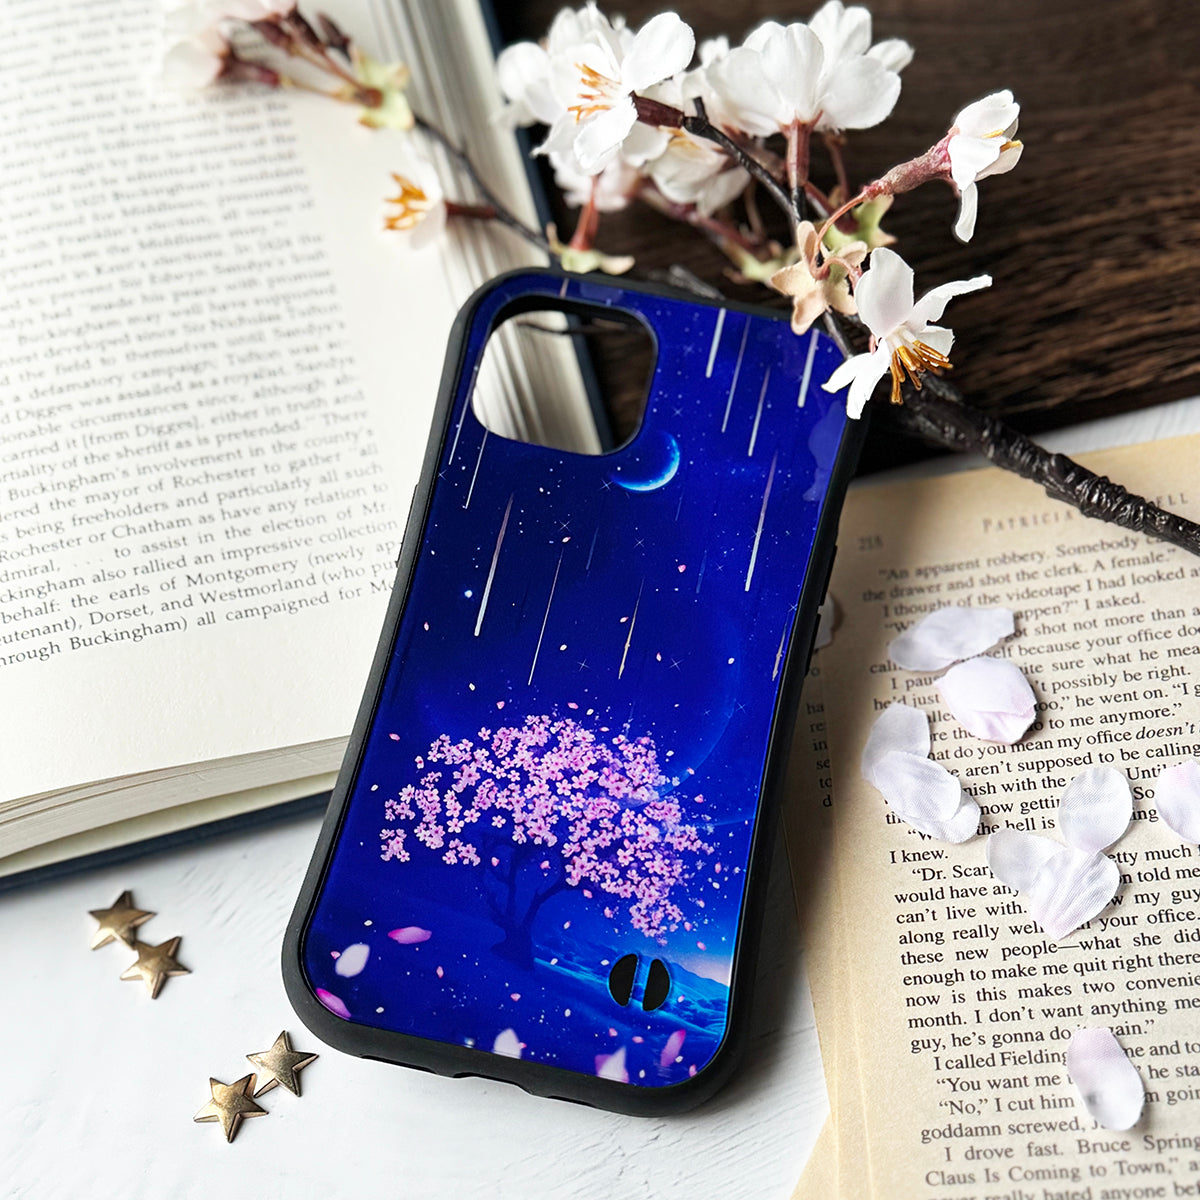 【iPhoneグリップケース】夜桜と流星群の景色 iPhoneグリップケース